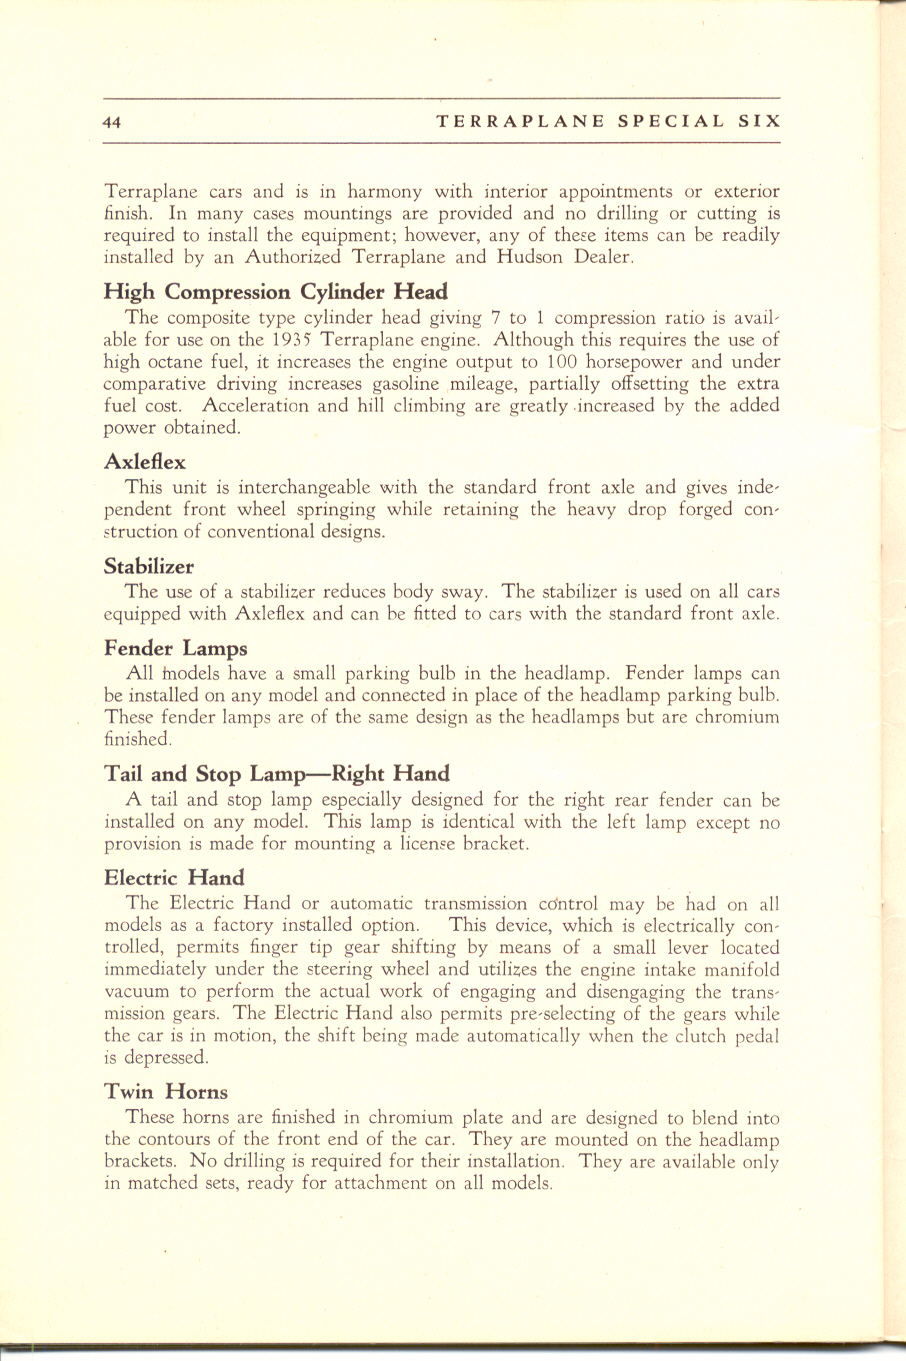 1935 Terraplane Manual-44